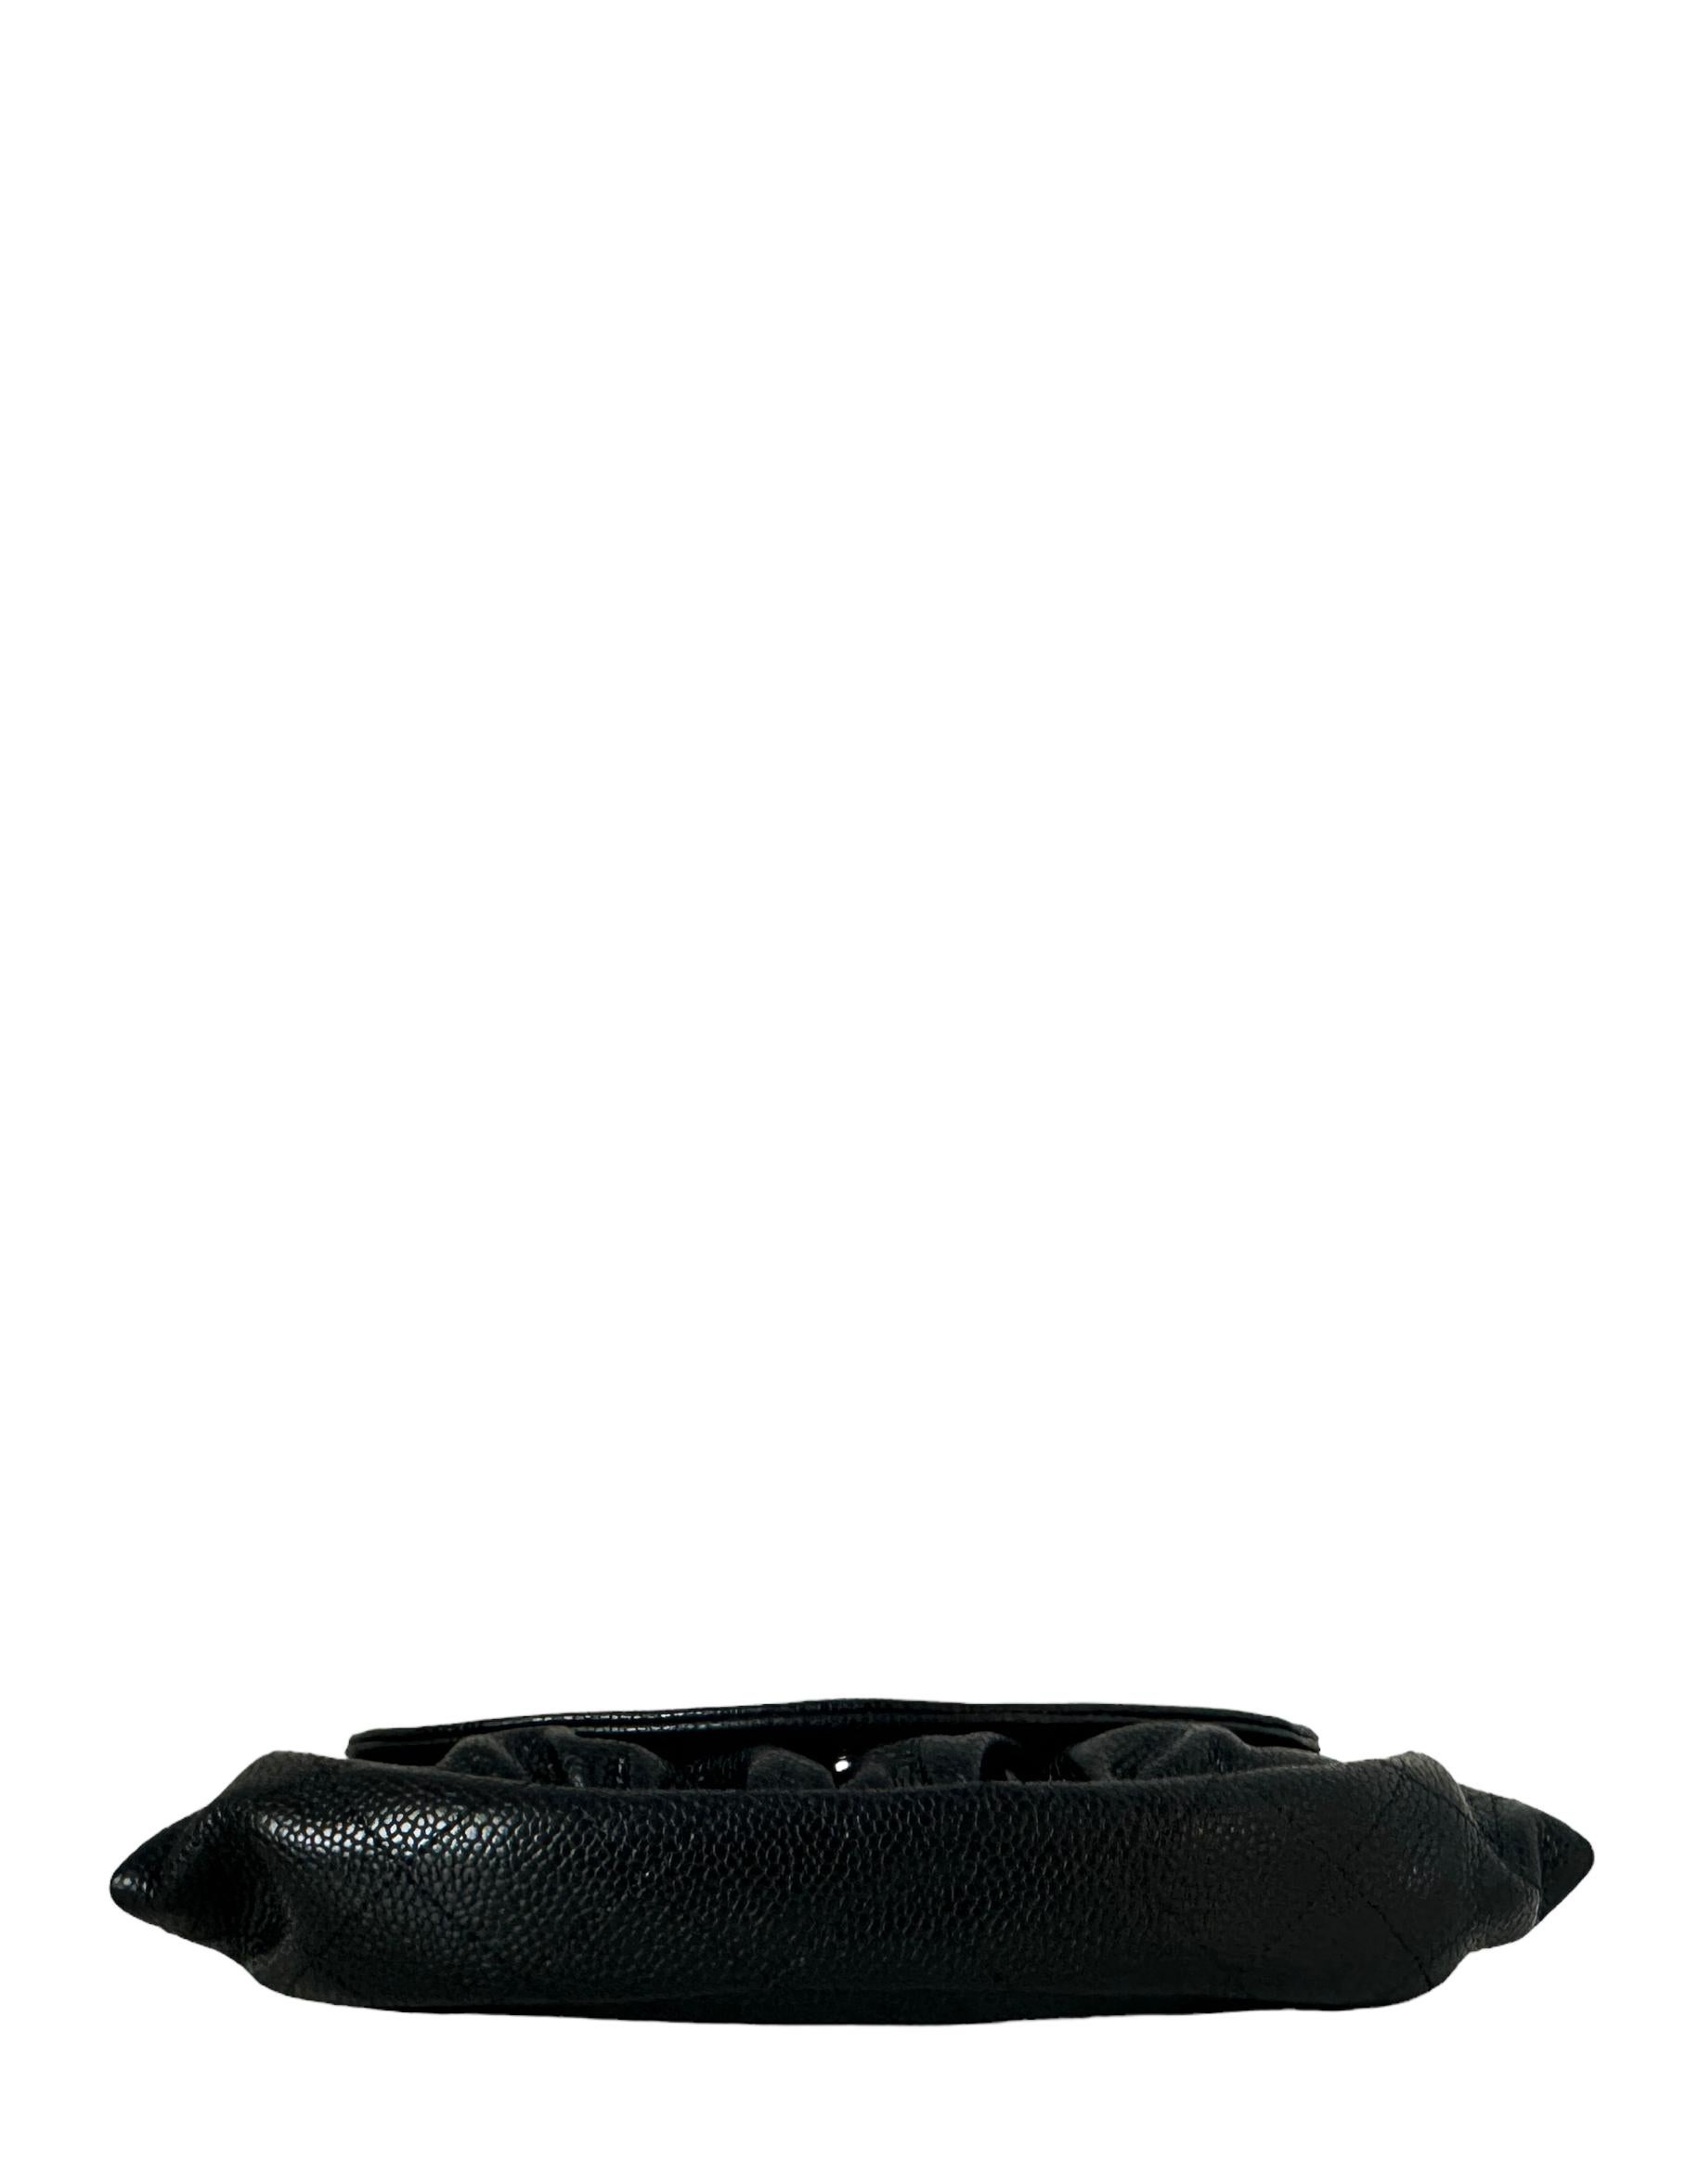 Women's Chanel Black Caviar Leather Half Moon Wallet On Chain WOC Crossbody Bag For Sale